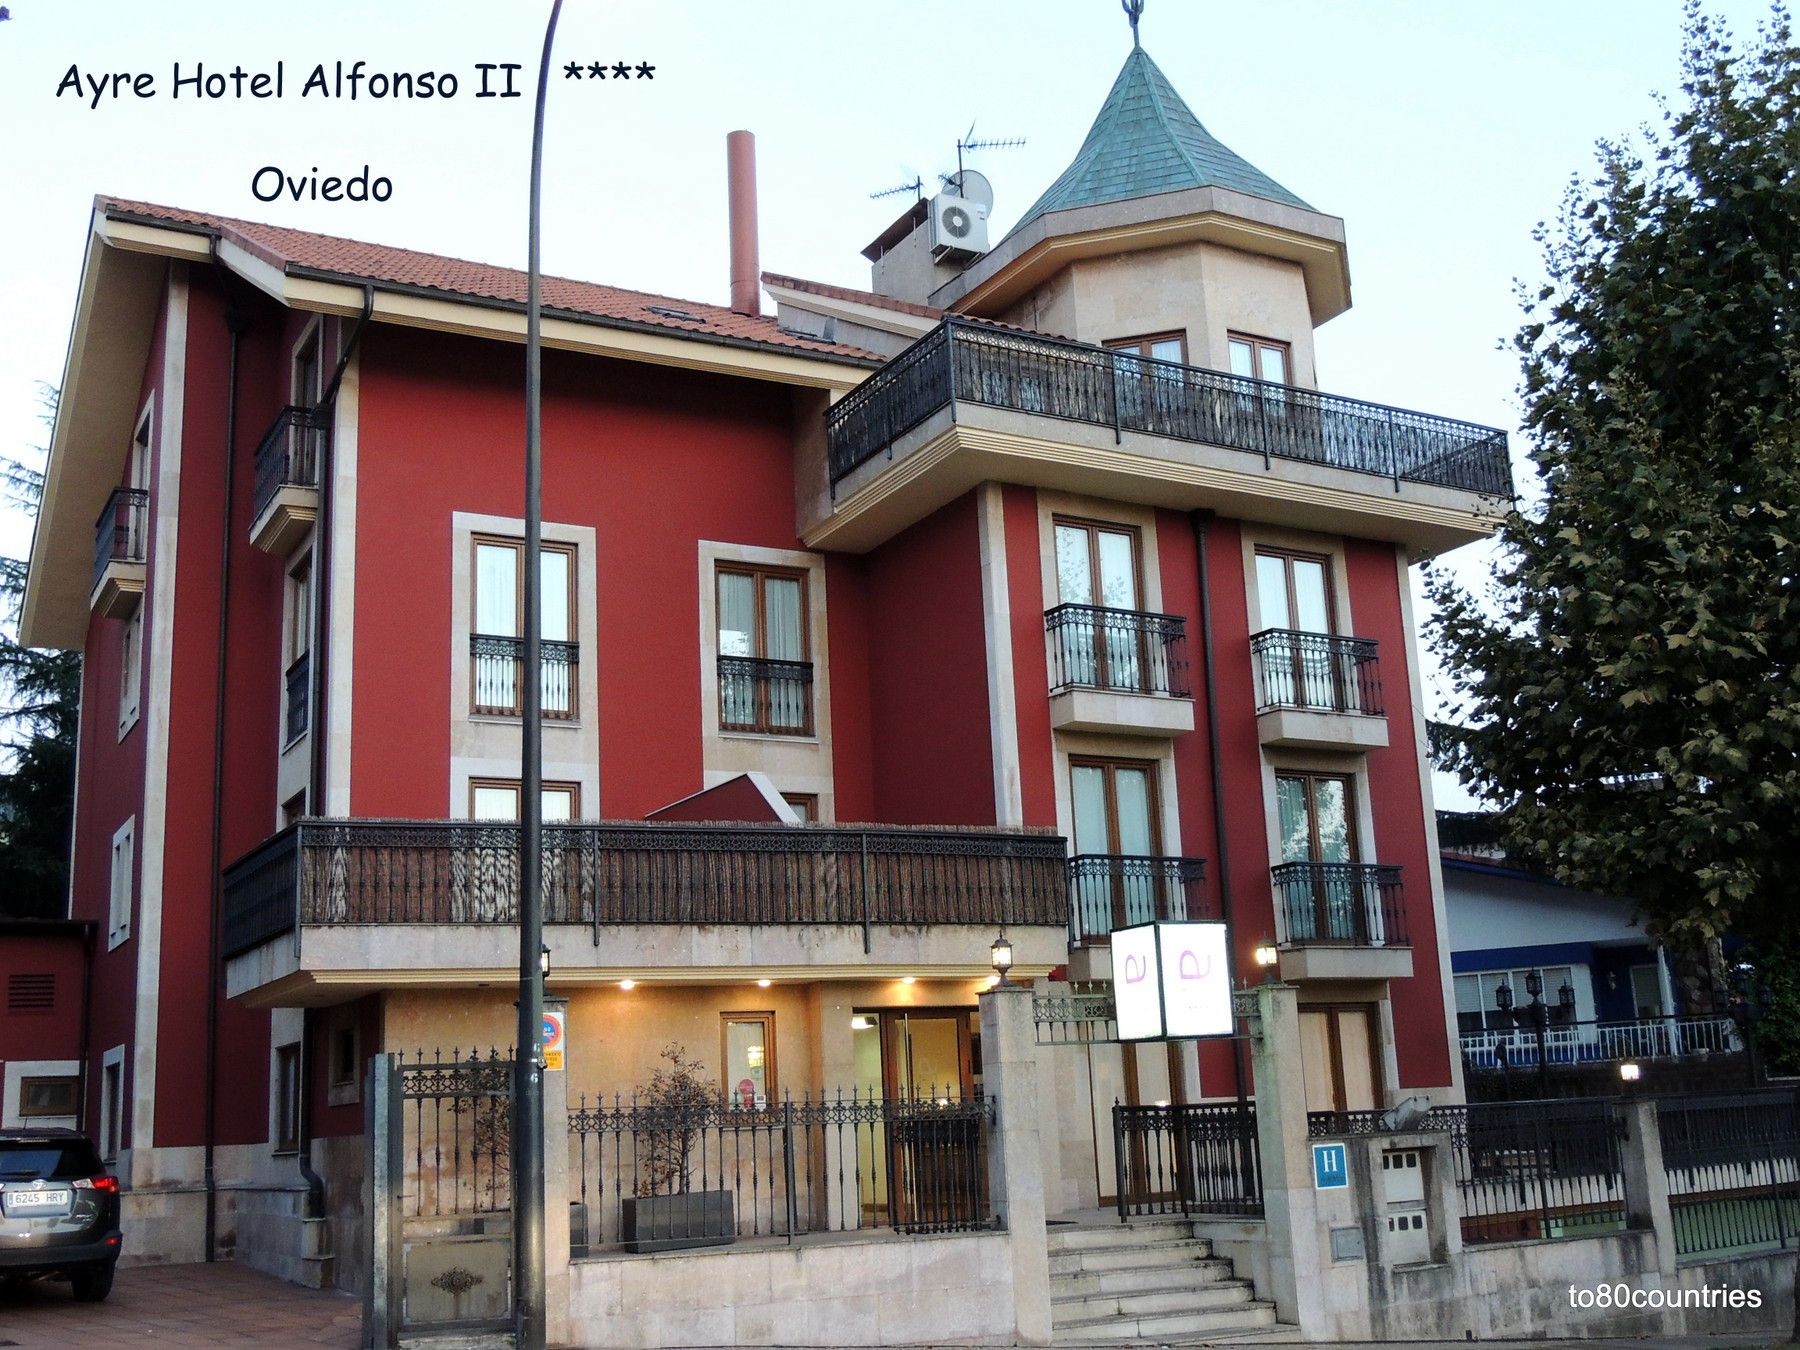 Ayre Hotel Alfonso II. in Oviedo